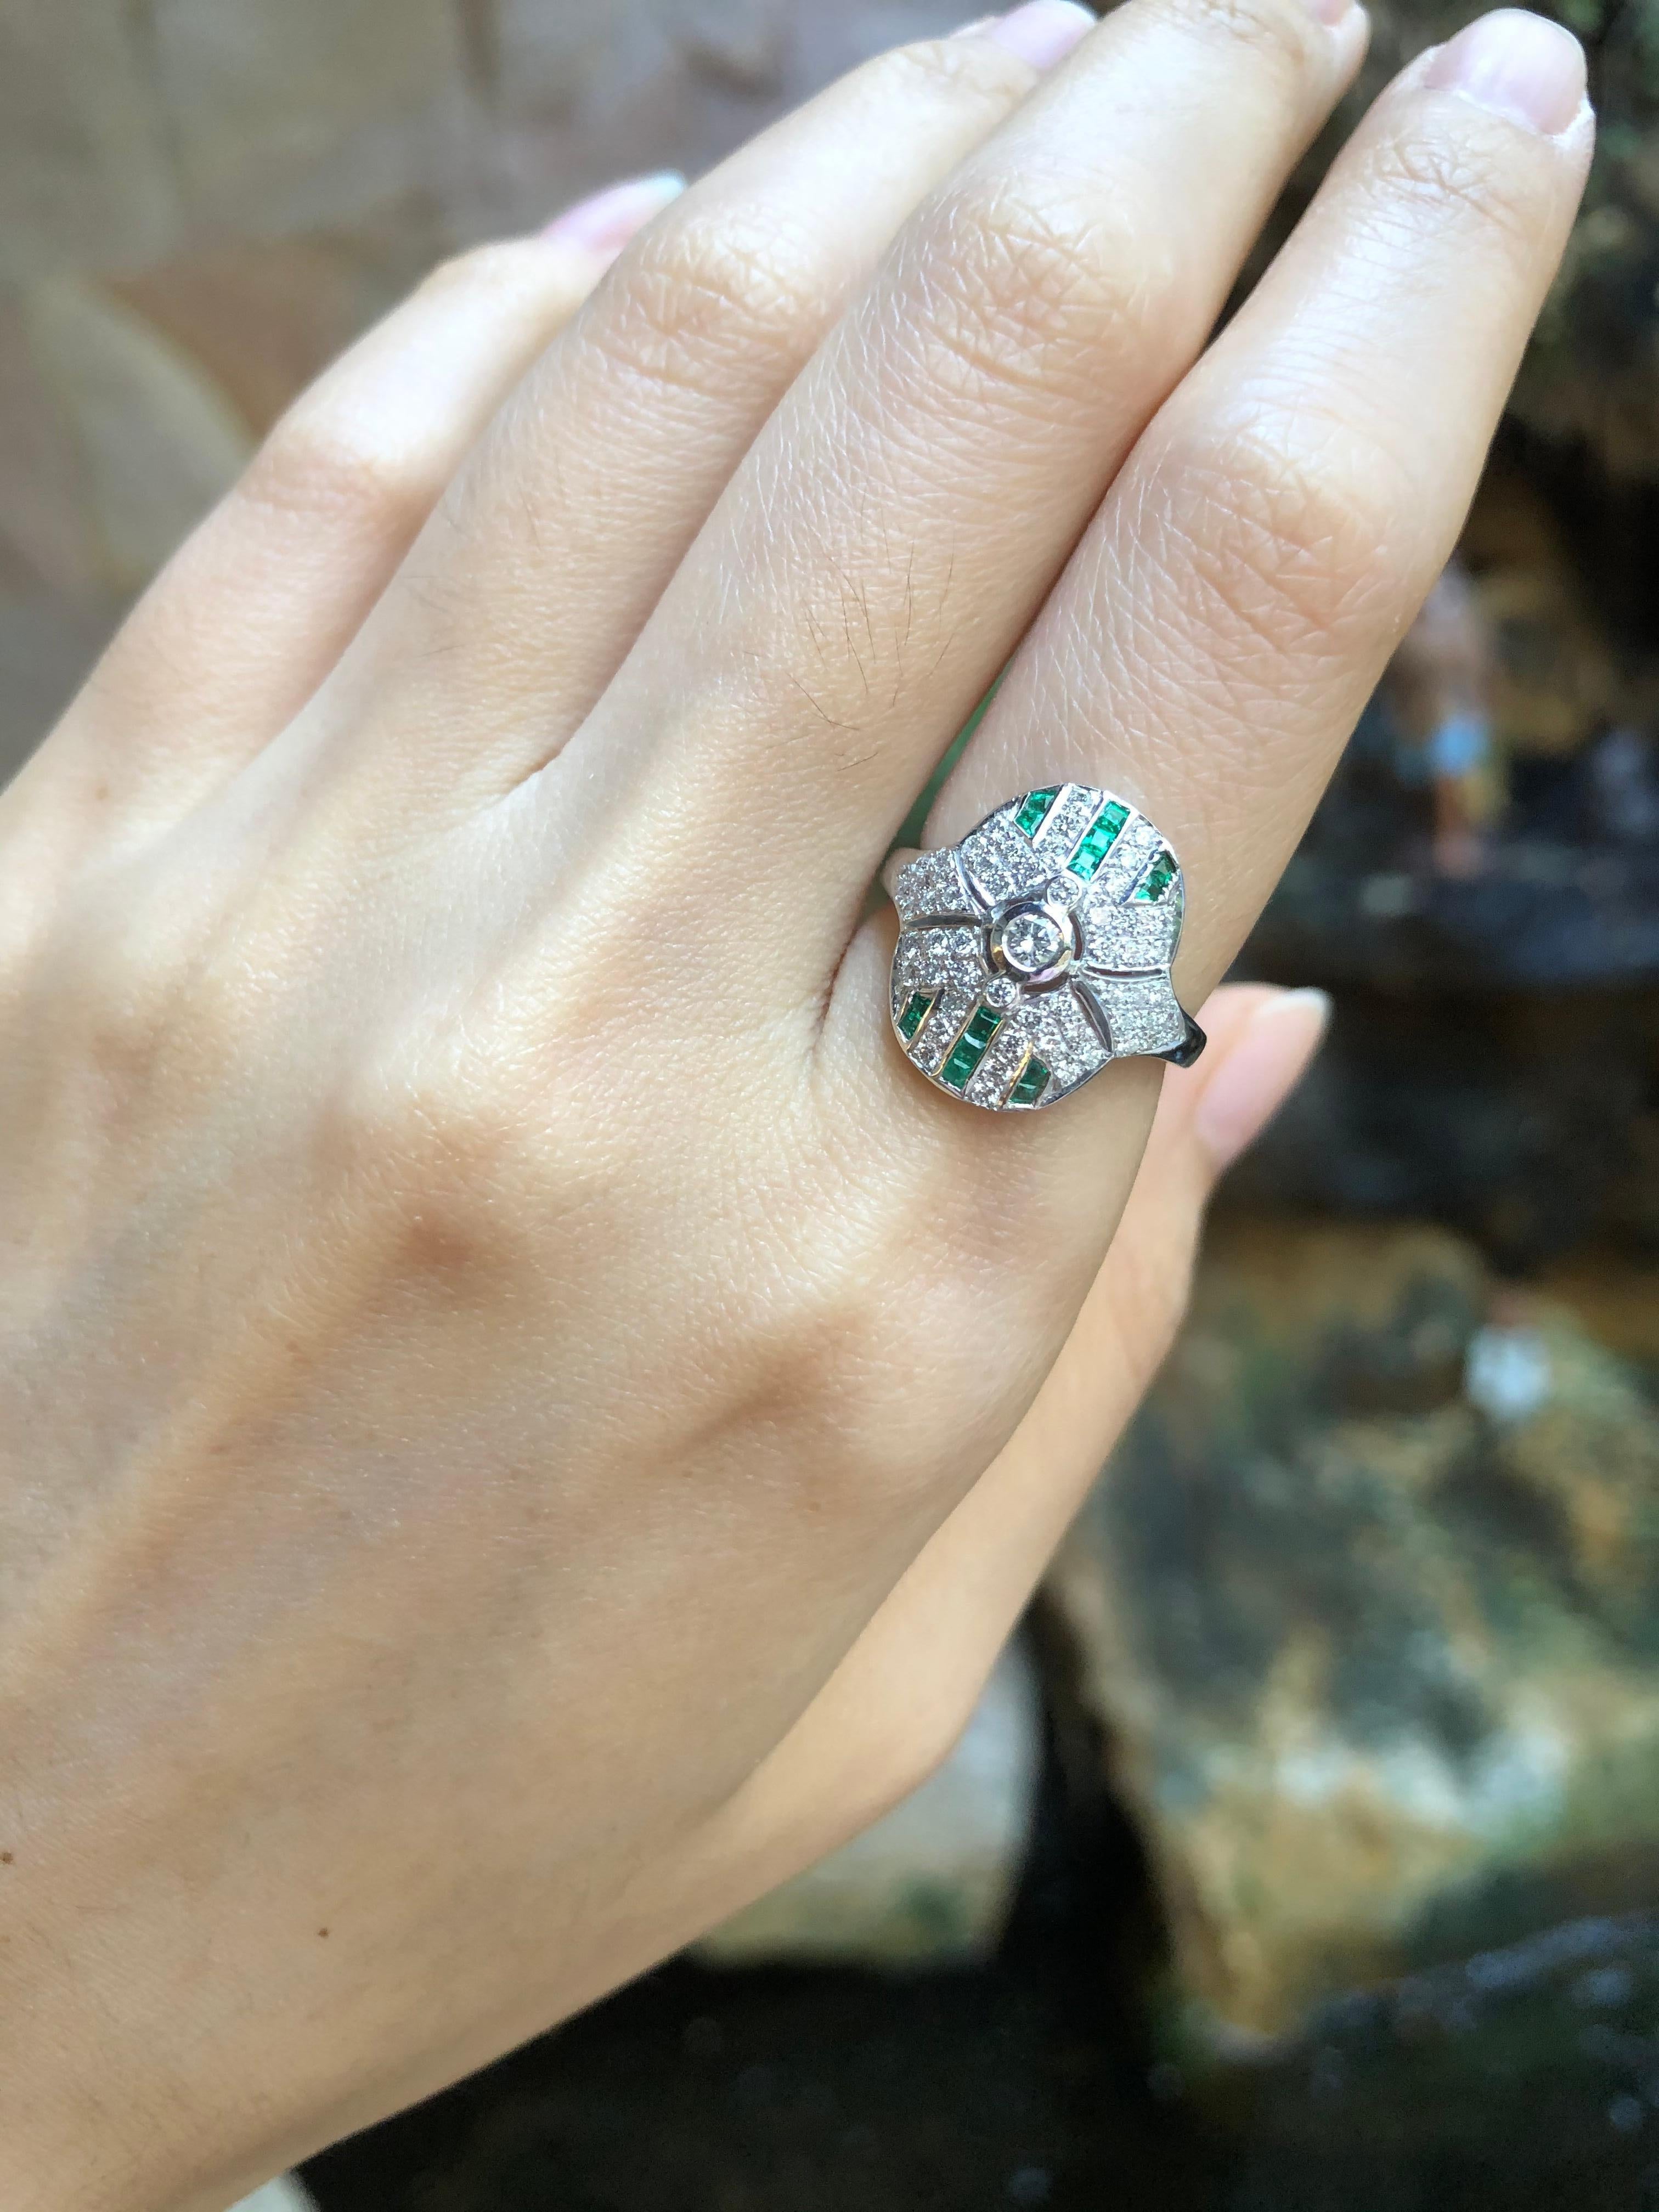 Diamond 0.51 carat with Emerald 0.37 carat Ring set in 18 Karat White Gold Settings

Width:  2.3 cm 
Length: 1.6 cm
Ring Size: 51
Total Weight: 4.13 grams

